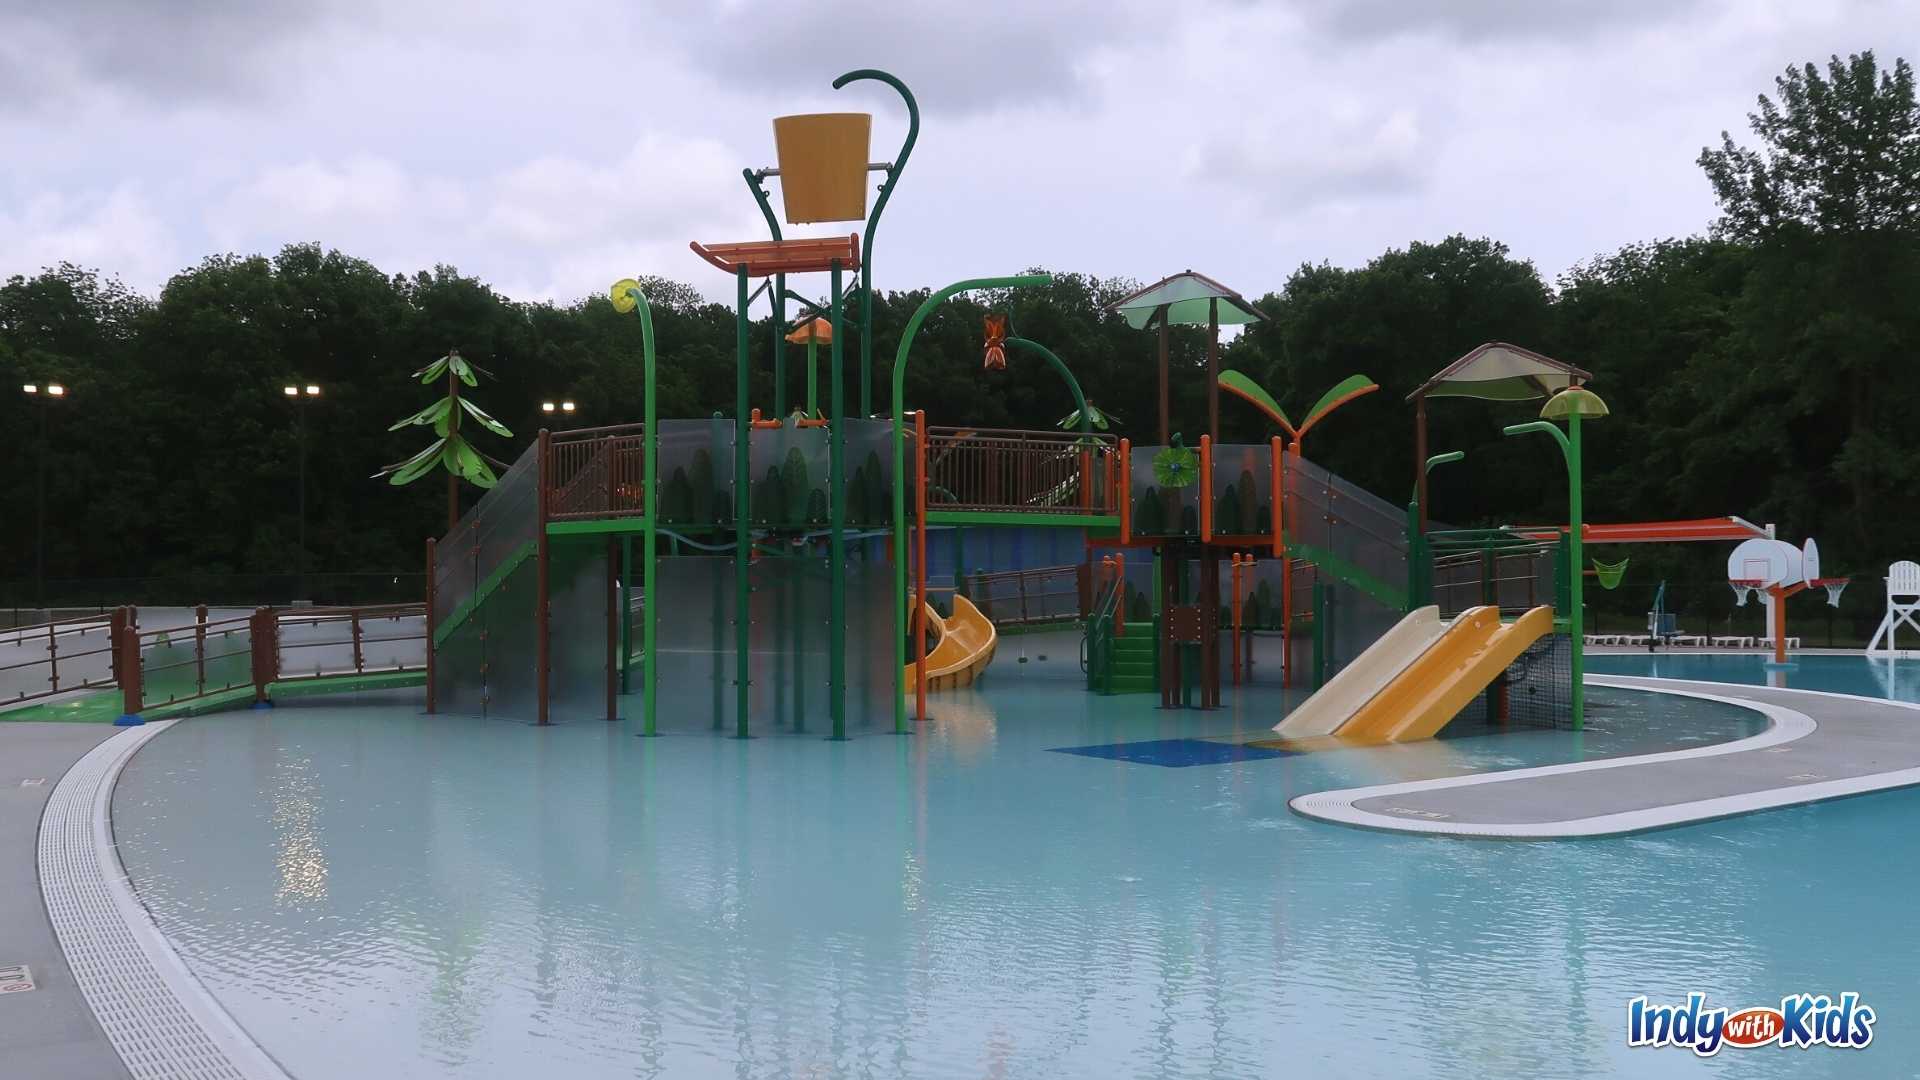 Public Pools Near Me: Murphy Aquatic Park in Avon is designed for inclusivity.